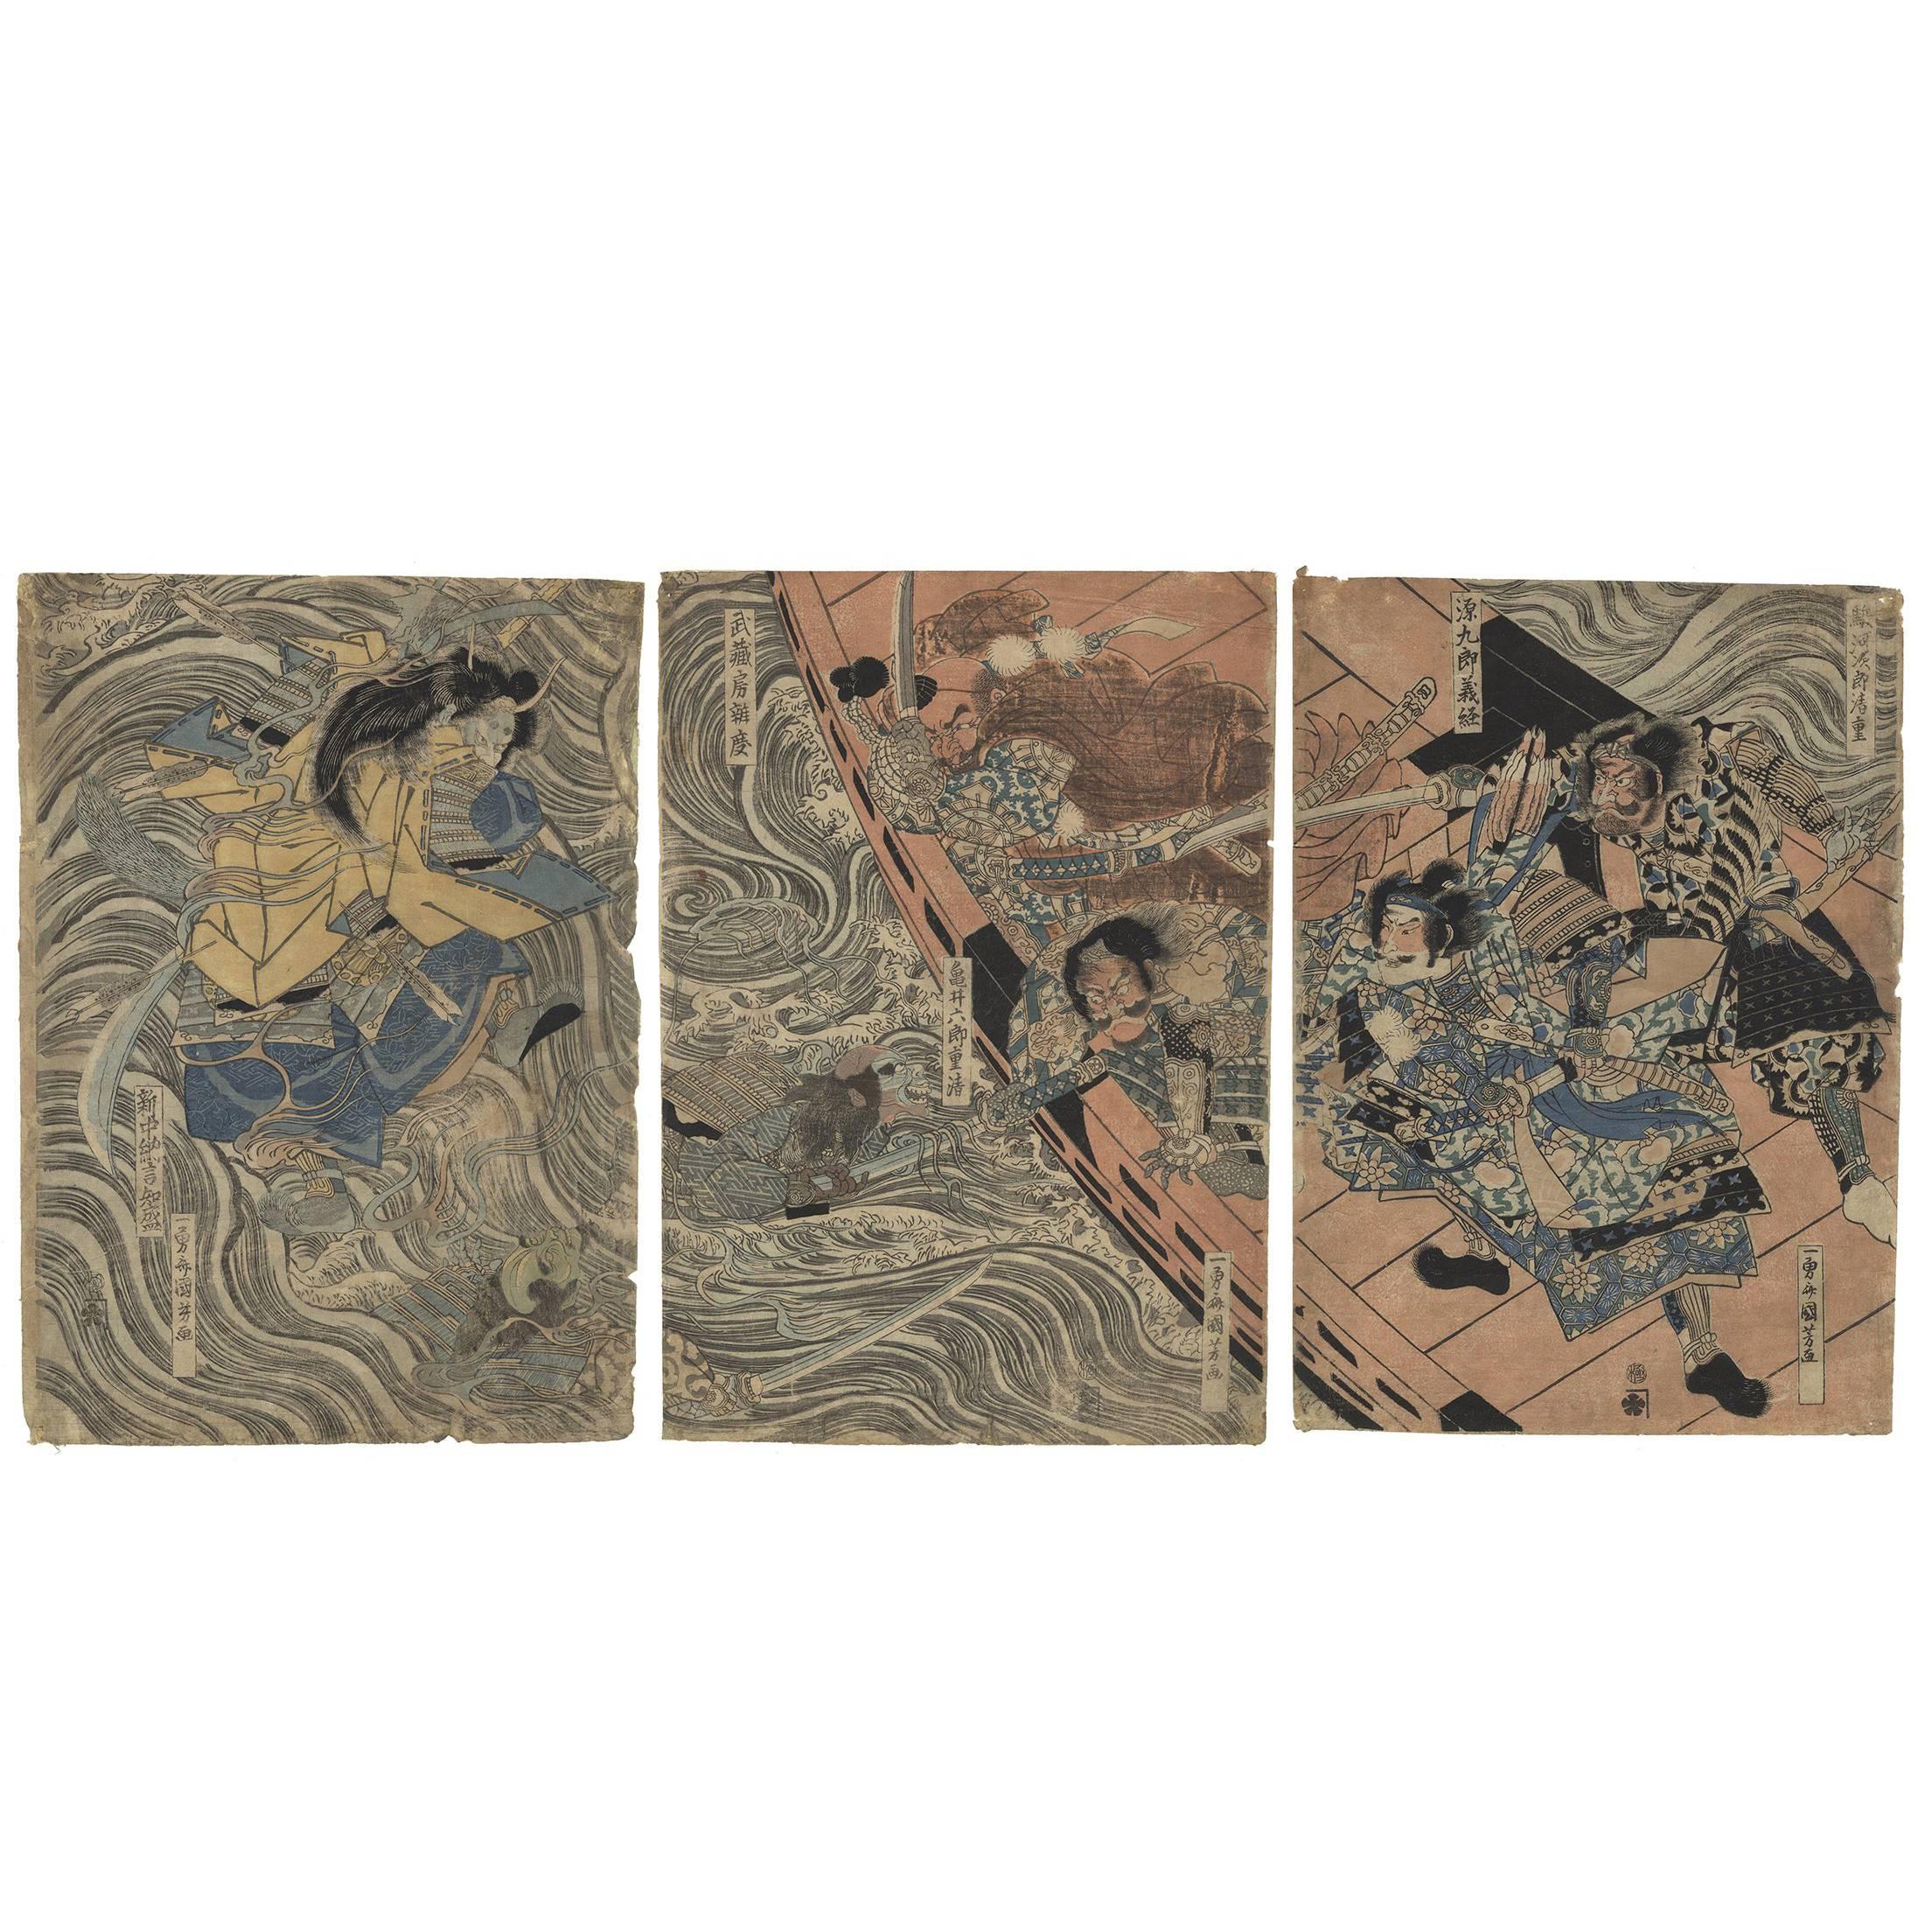 19th Century Utagawa Kuniyoshi Triptych Japanese Woodblock Print Ukiyo-e